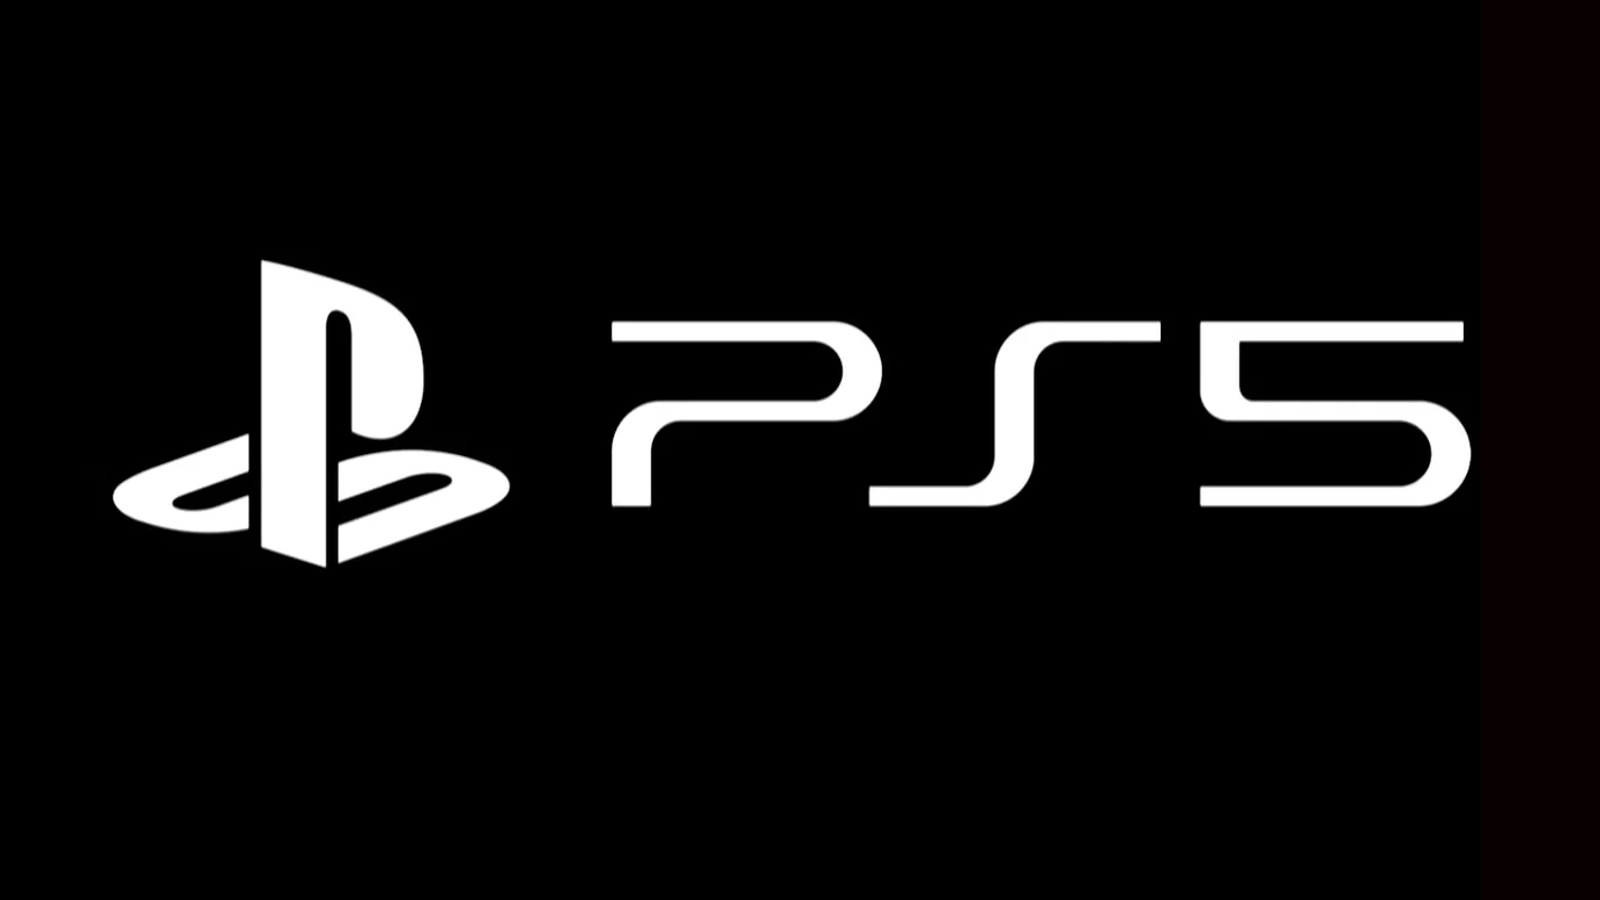 Sony confirma aumento de preço do PlayStation Plus no Brasil - Olhar Digital